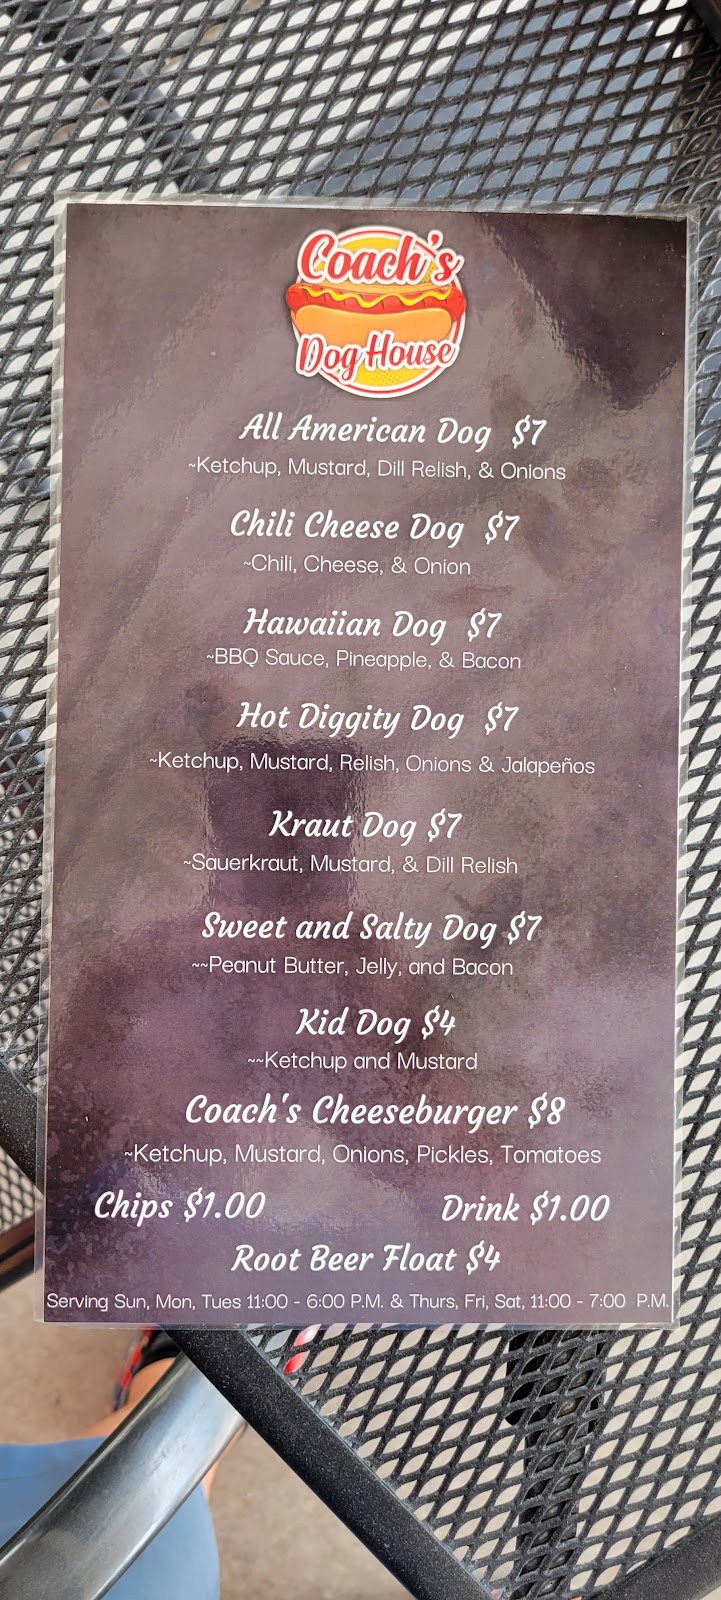 Coachs Dog House | restaurant | 150 S Main St, Marysvale, UT 84750, USA